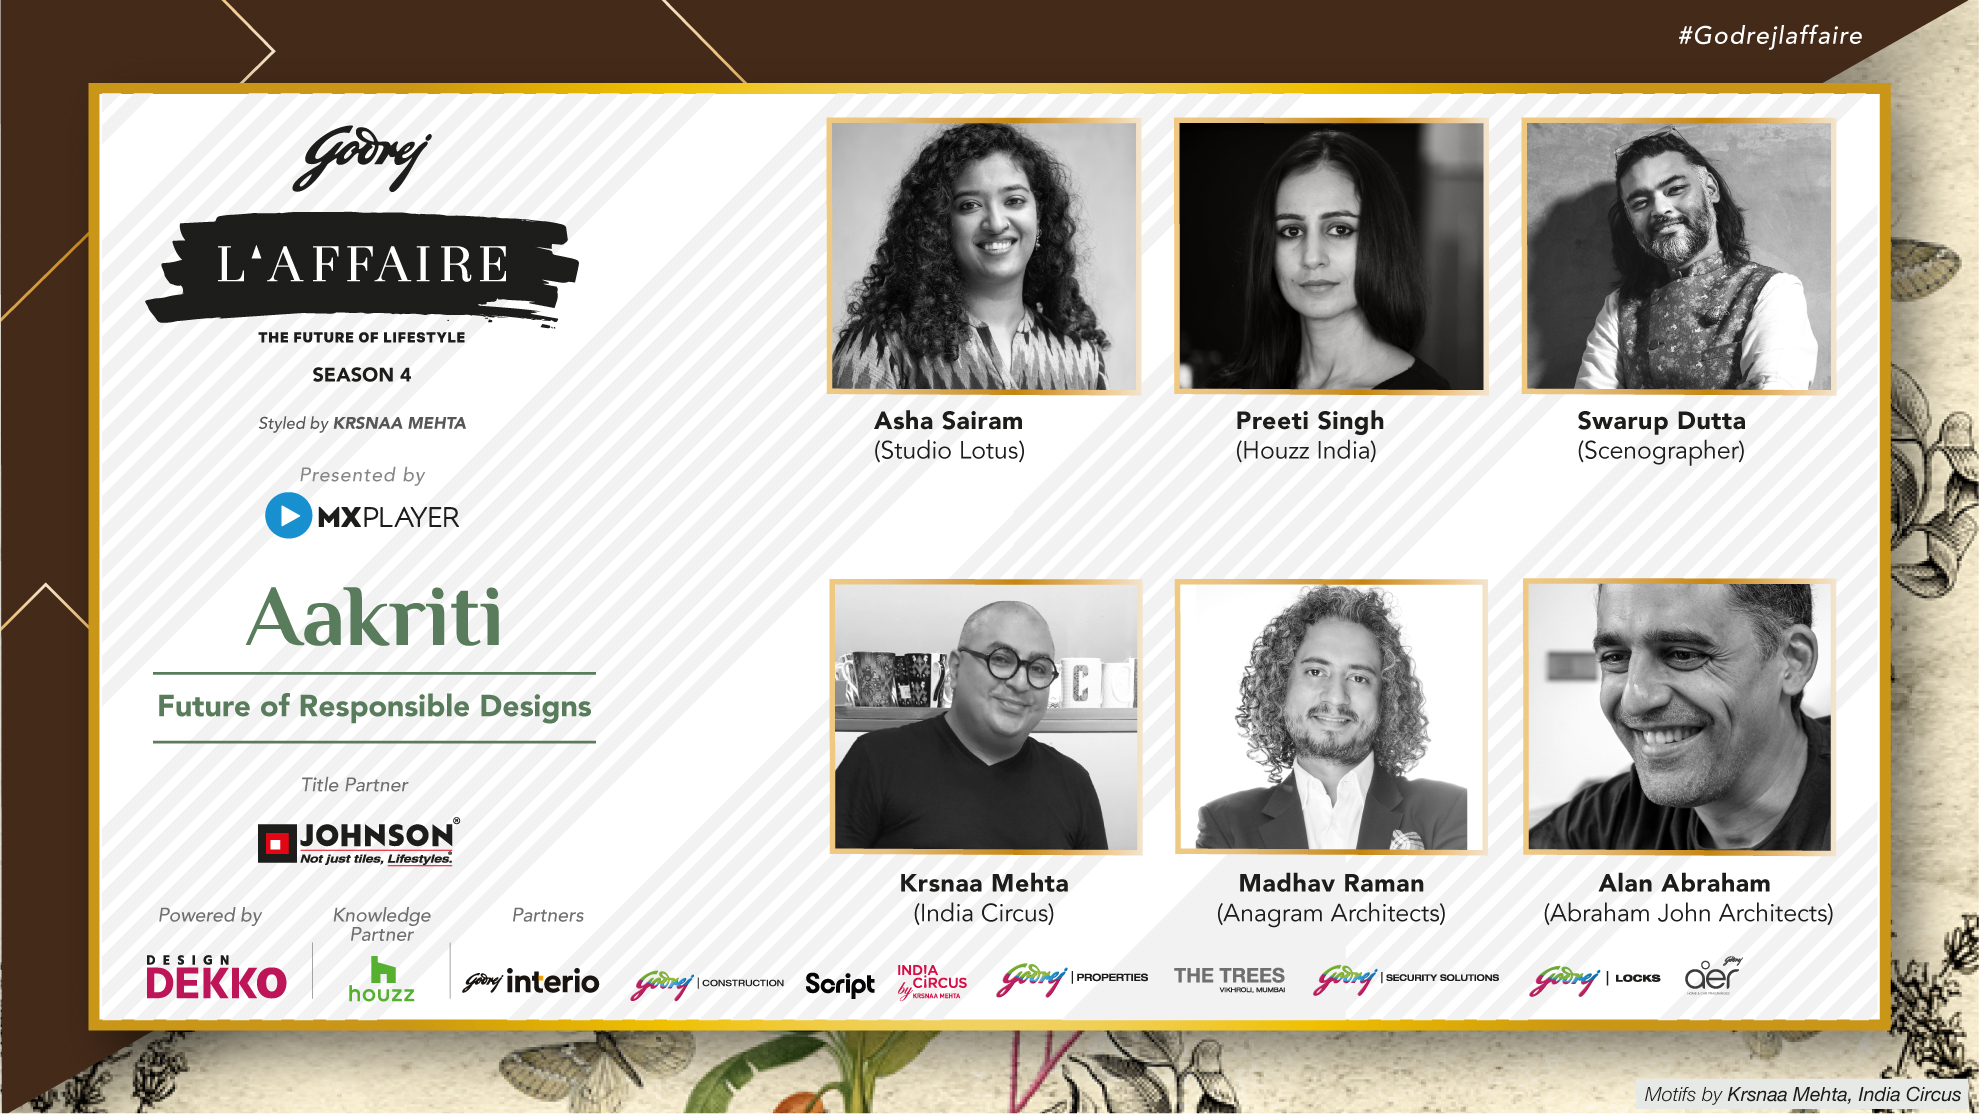 India’s top designers like Krsnaa Mehta, Alan Abraham, Madhav Raman, Swarup Dutta and Asha Sairam to discuss ways to make homes sustainable at Godrej L’Affaire